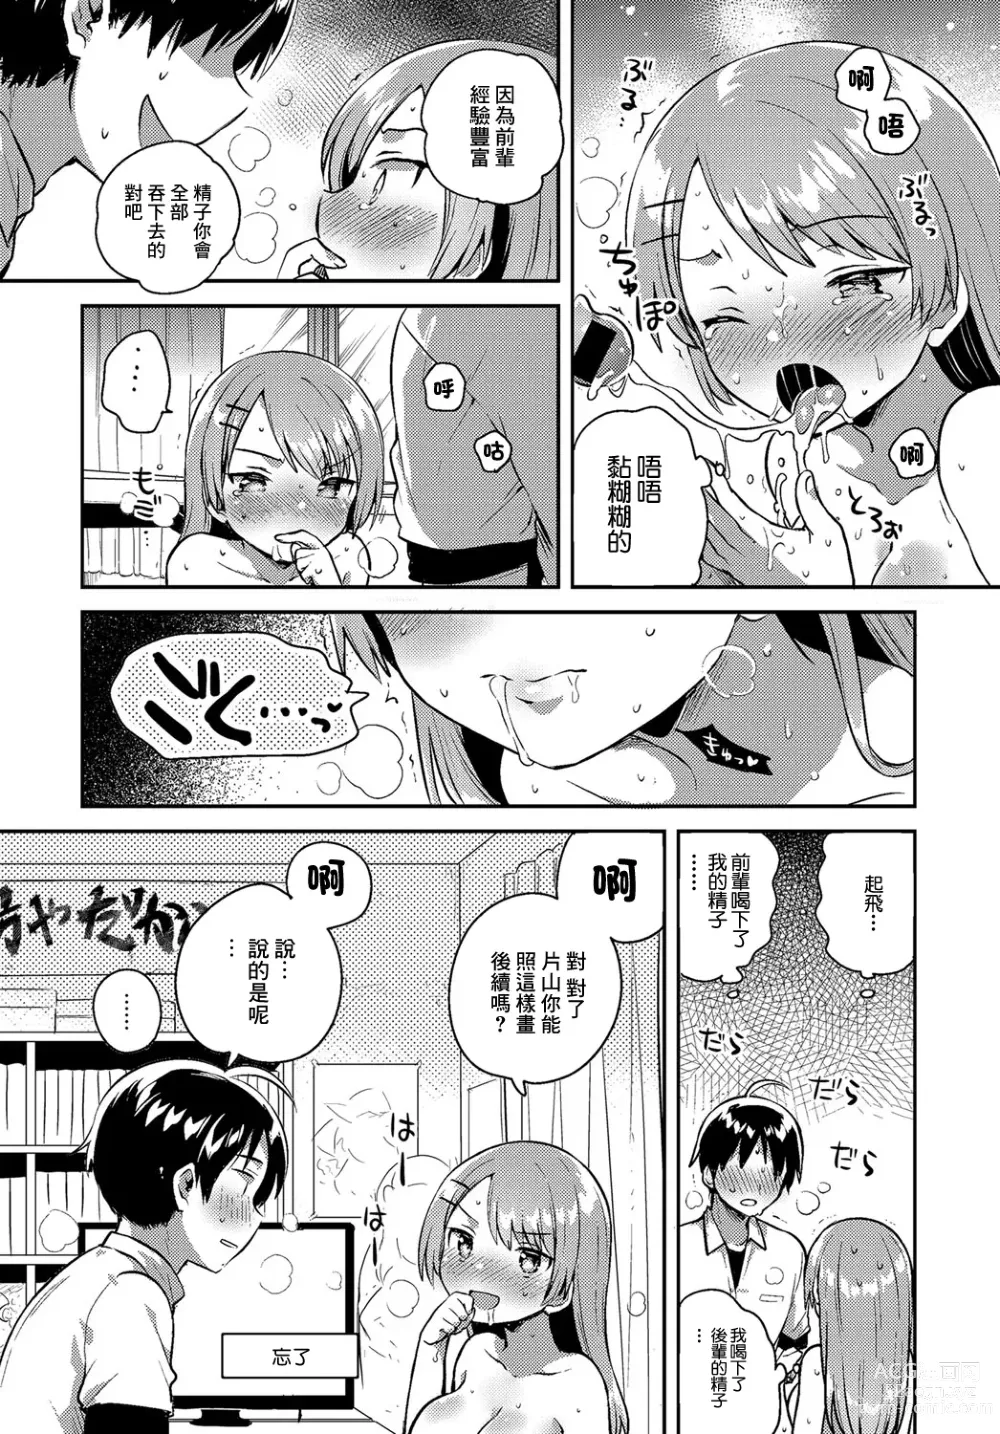 Page 10 of manga Detarame Revenge Match